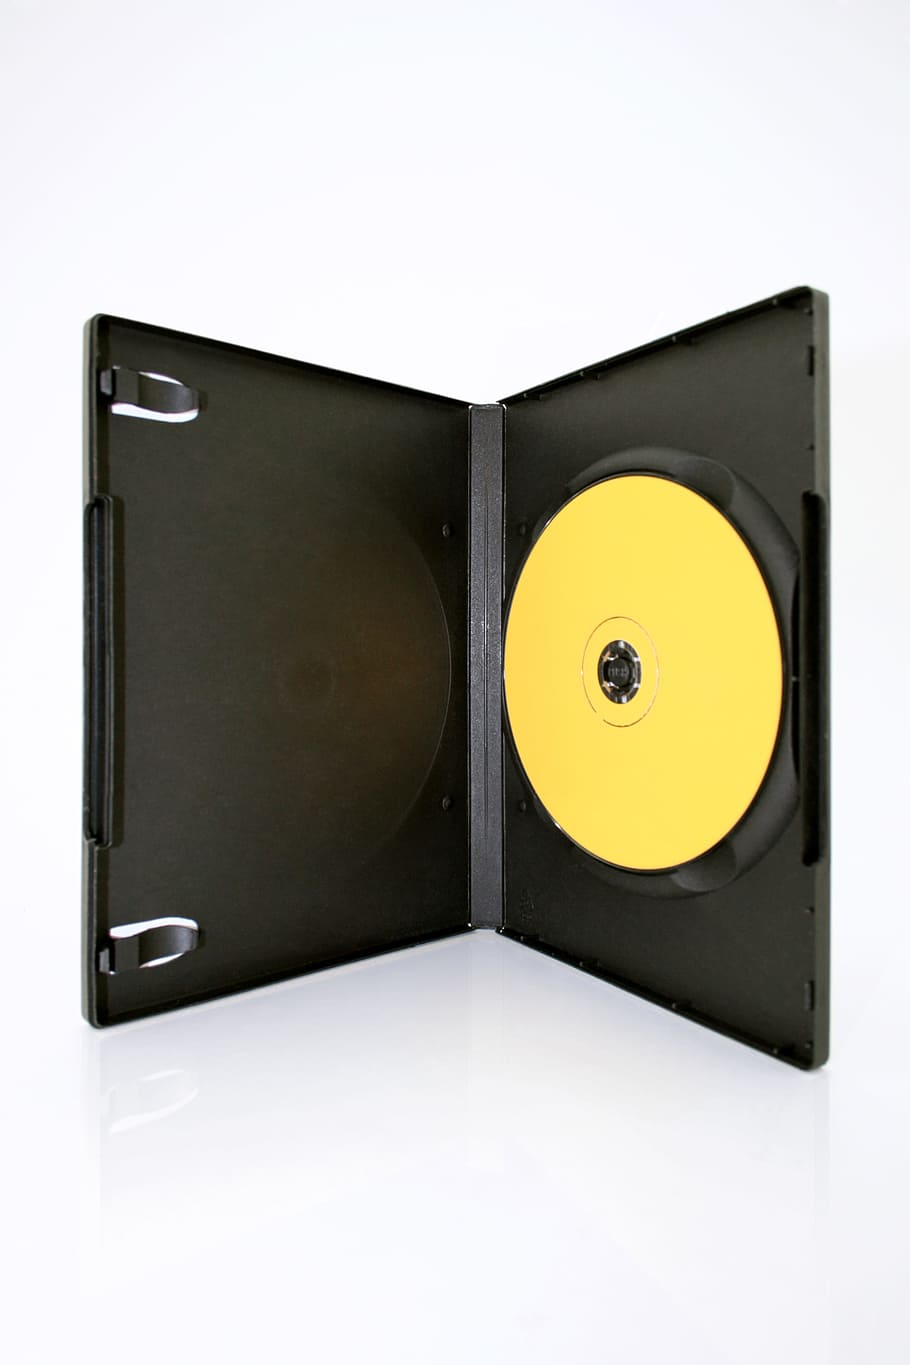 black, blank, bonus, box, cd, compact, computer, container